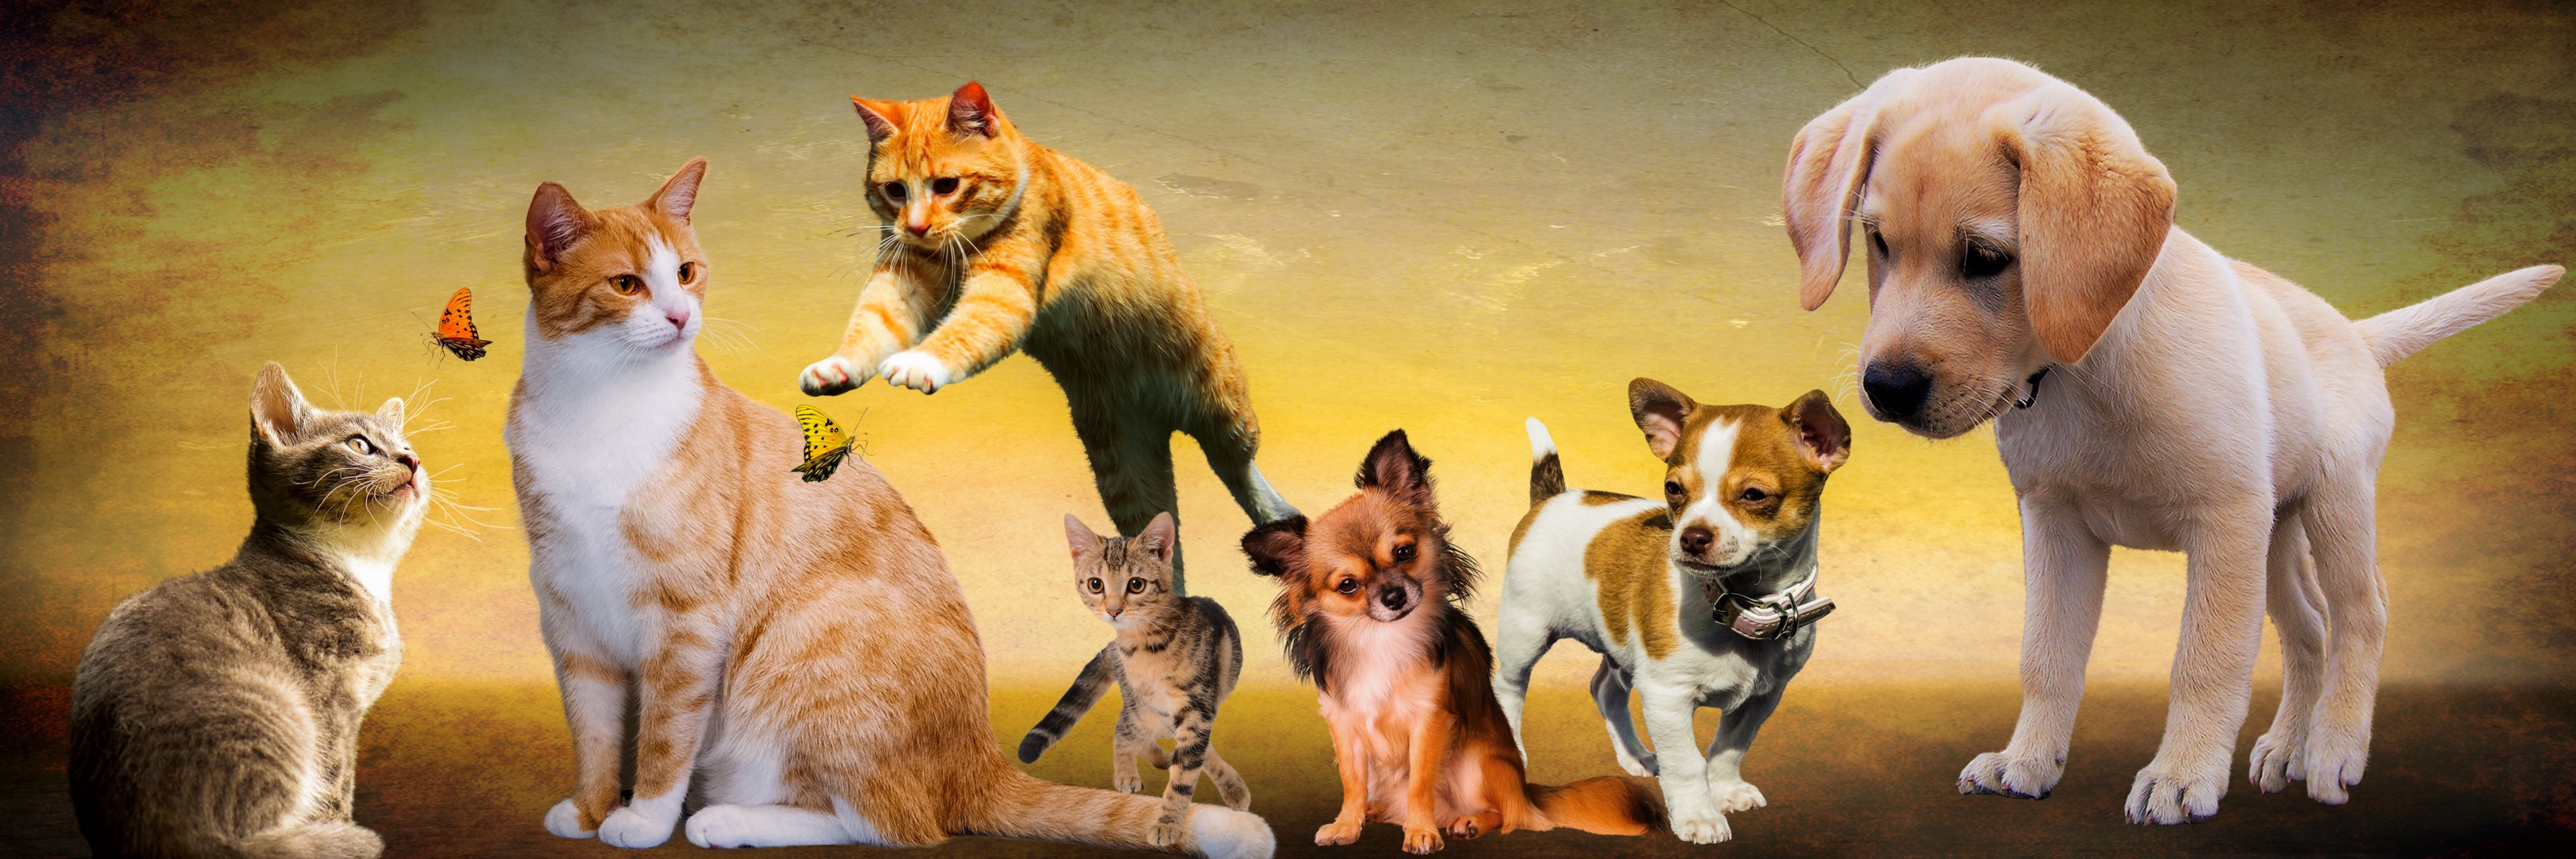 О собаках и кошках панорама